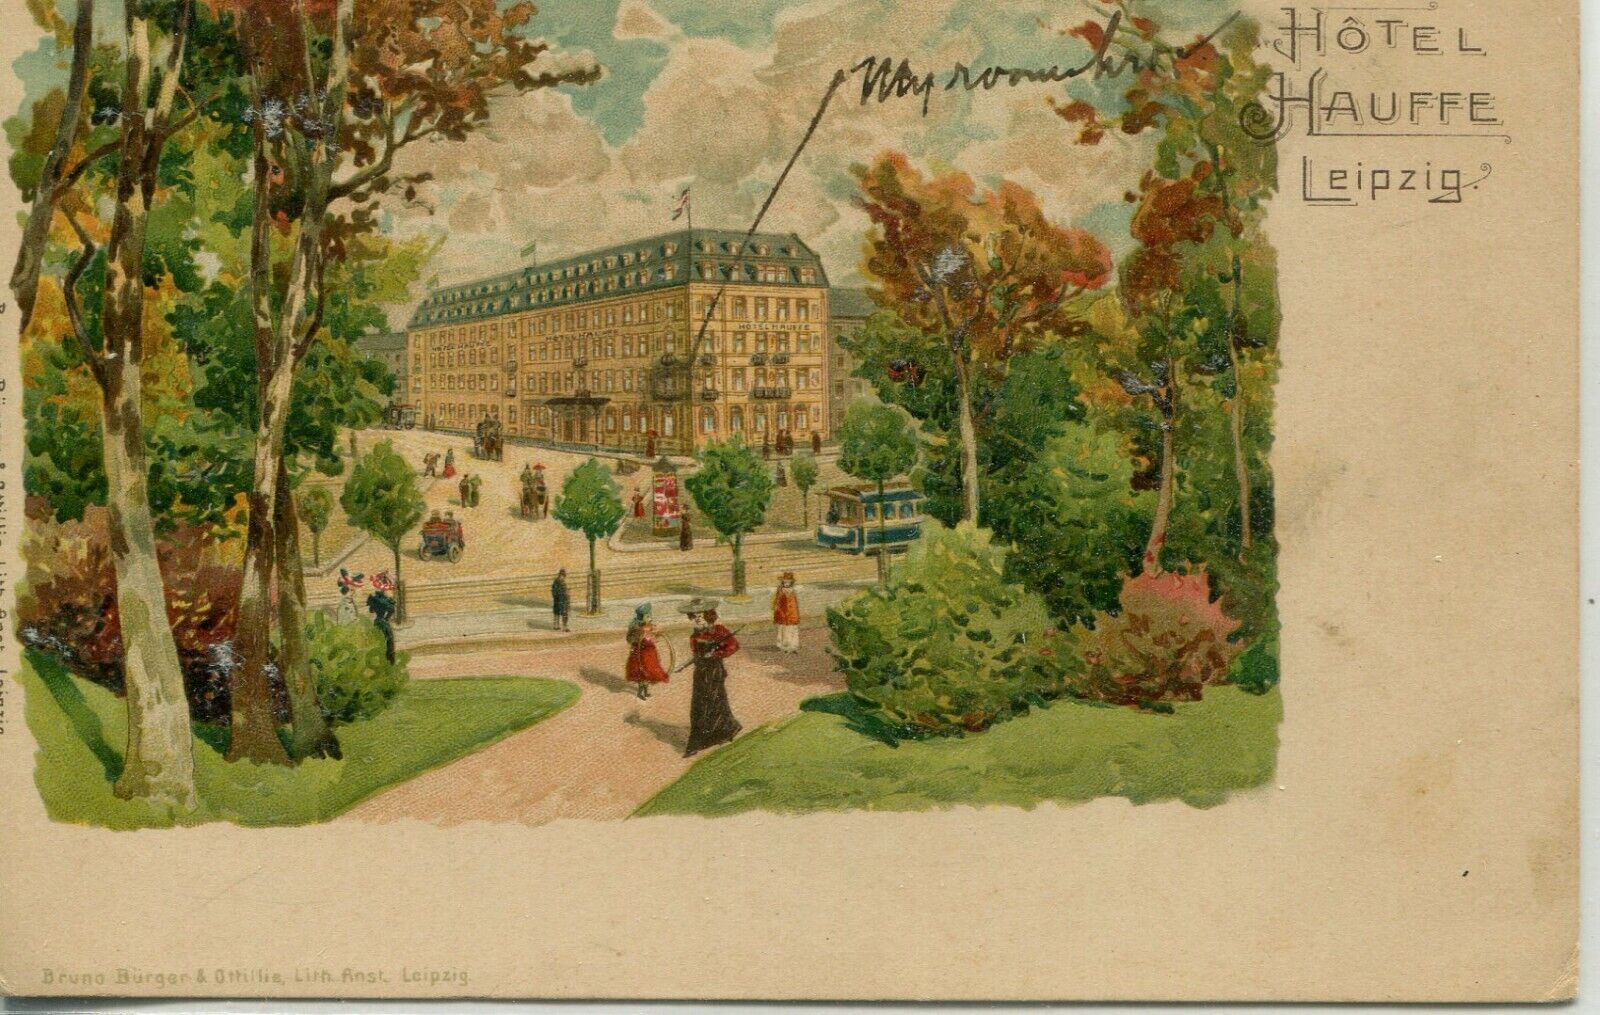 Germany AK Leipzig - Hotel Hauffe old vintage postcard